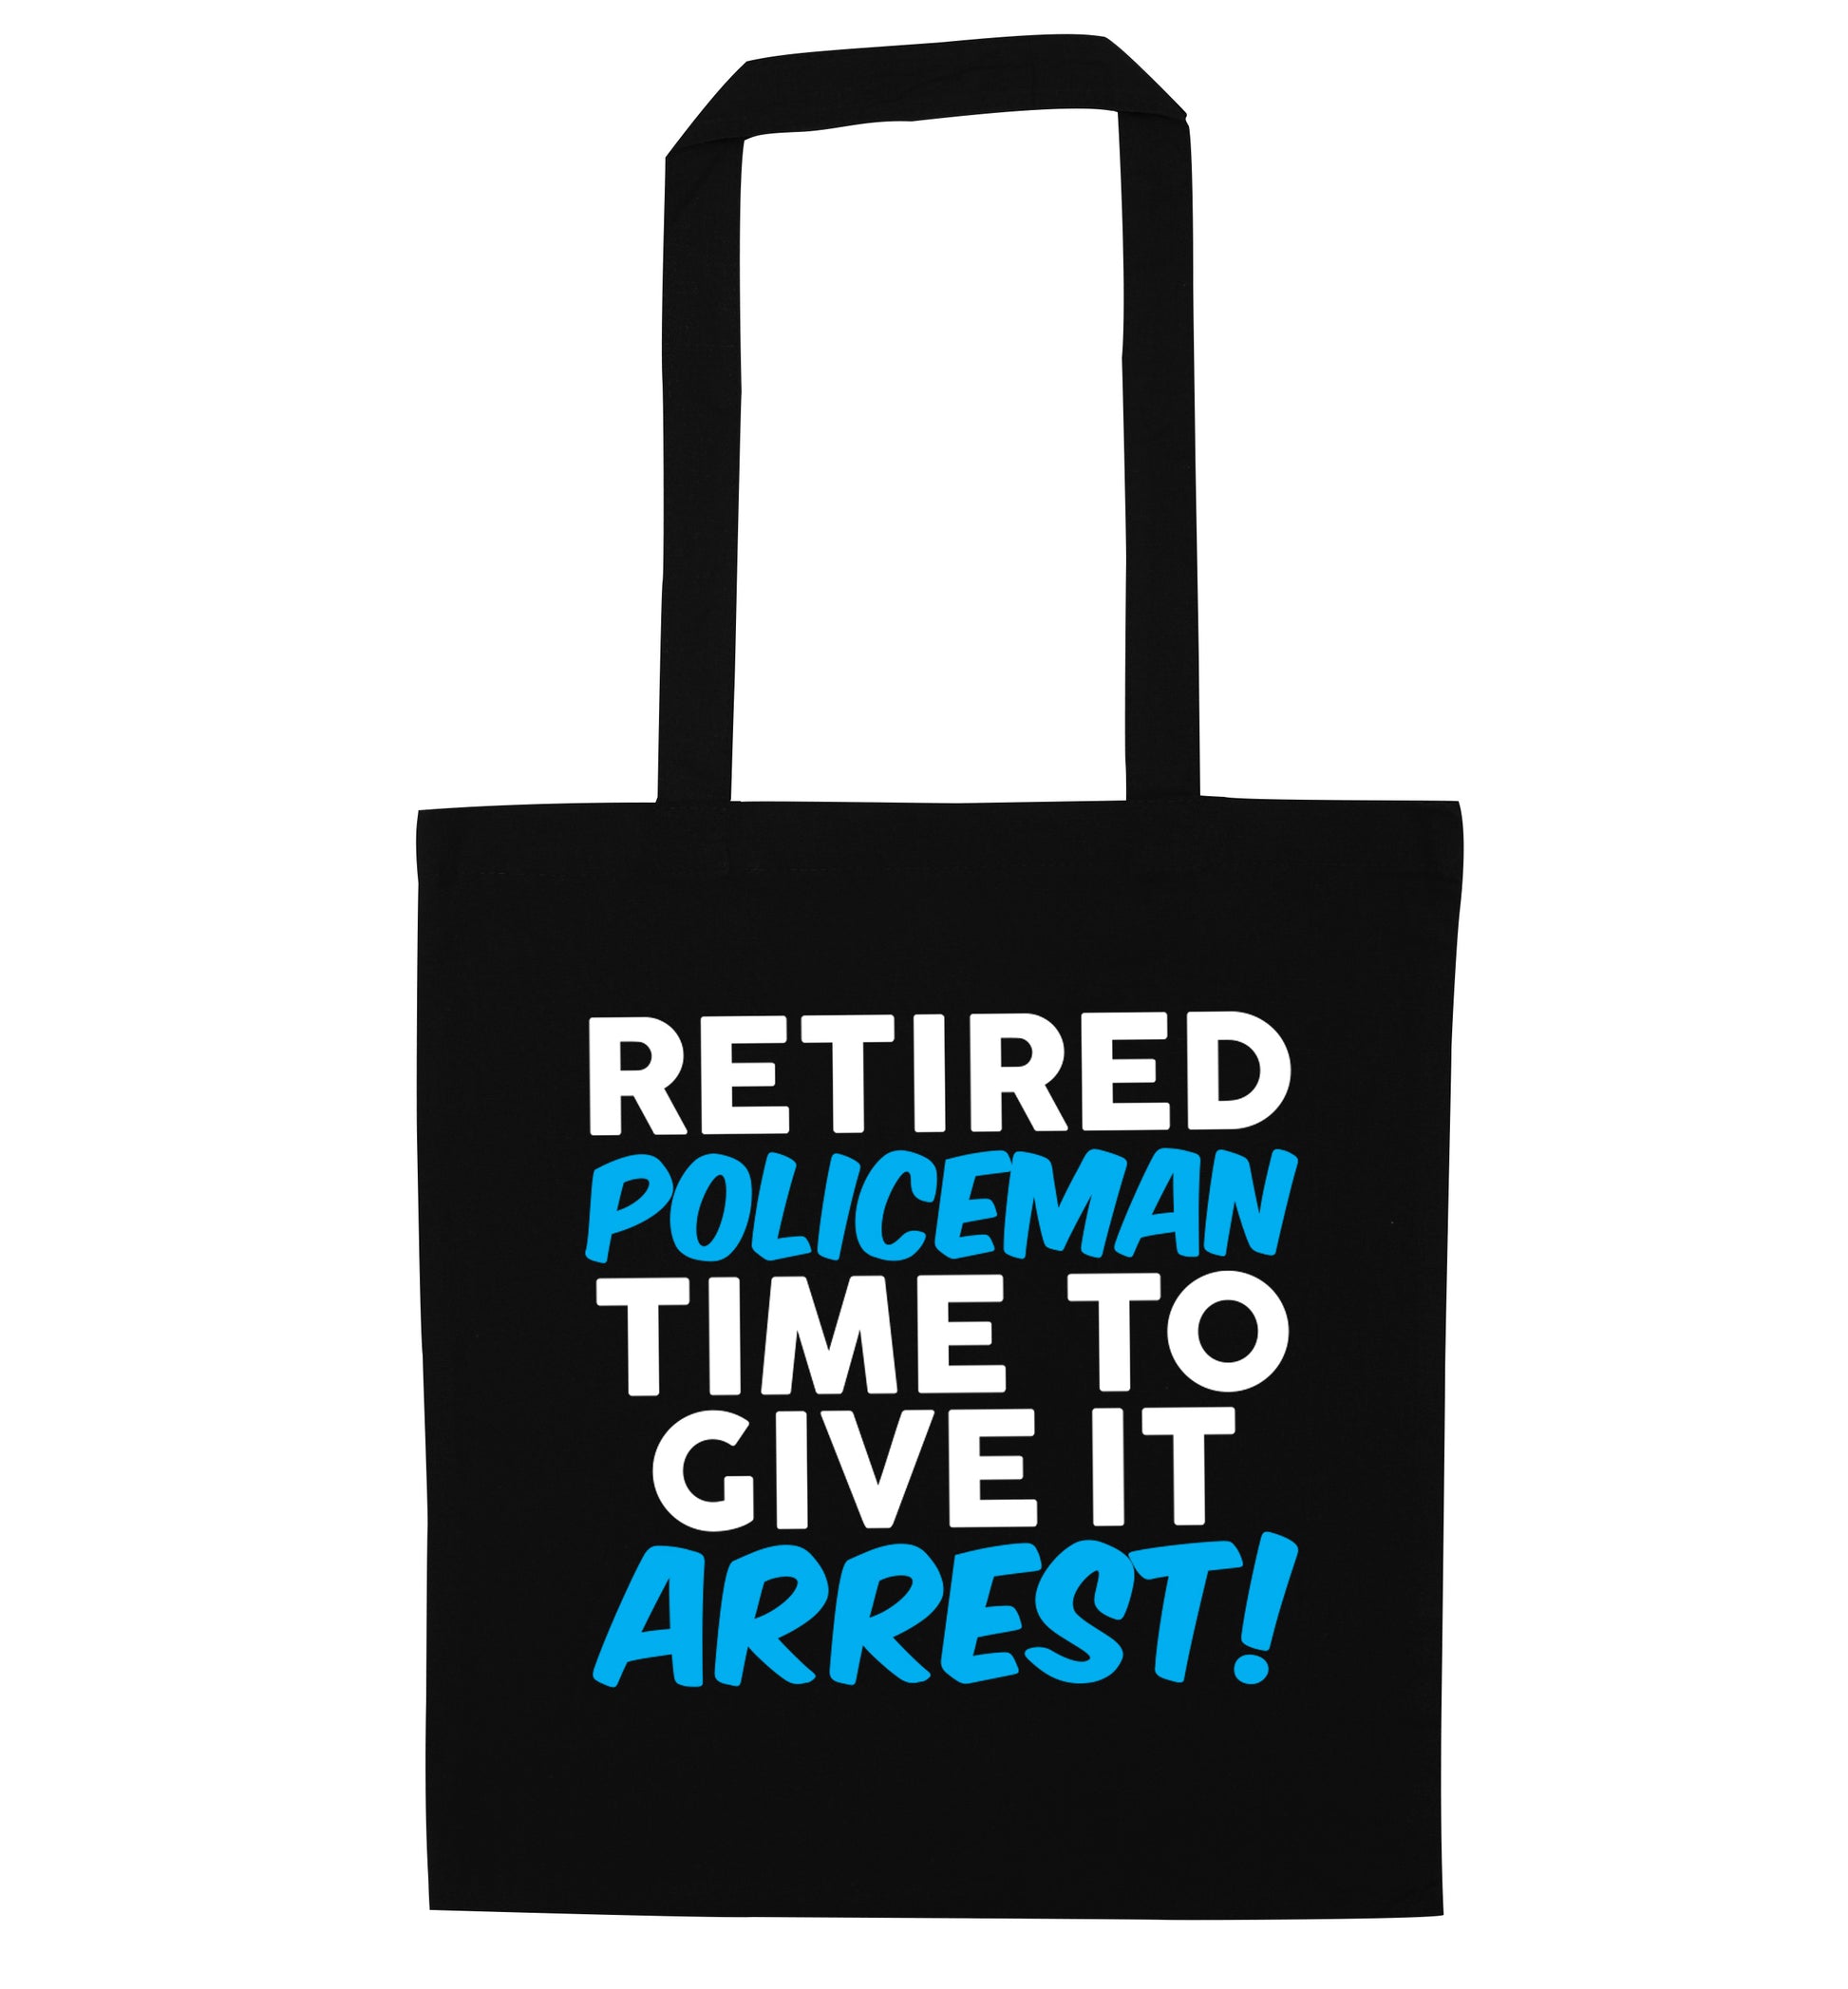 Retired policeman give it arresst! black tote bag